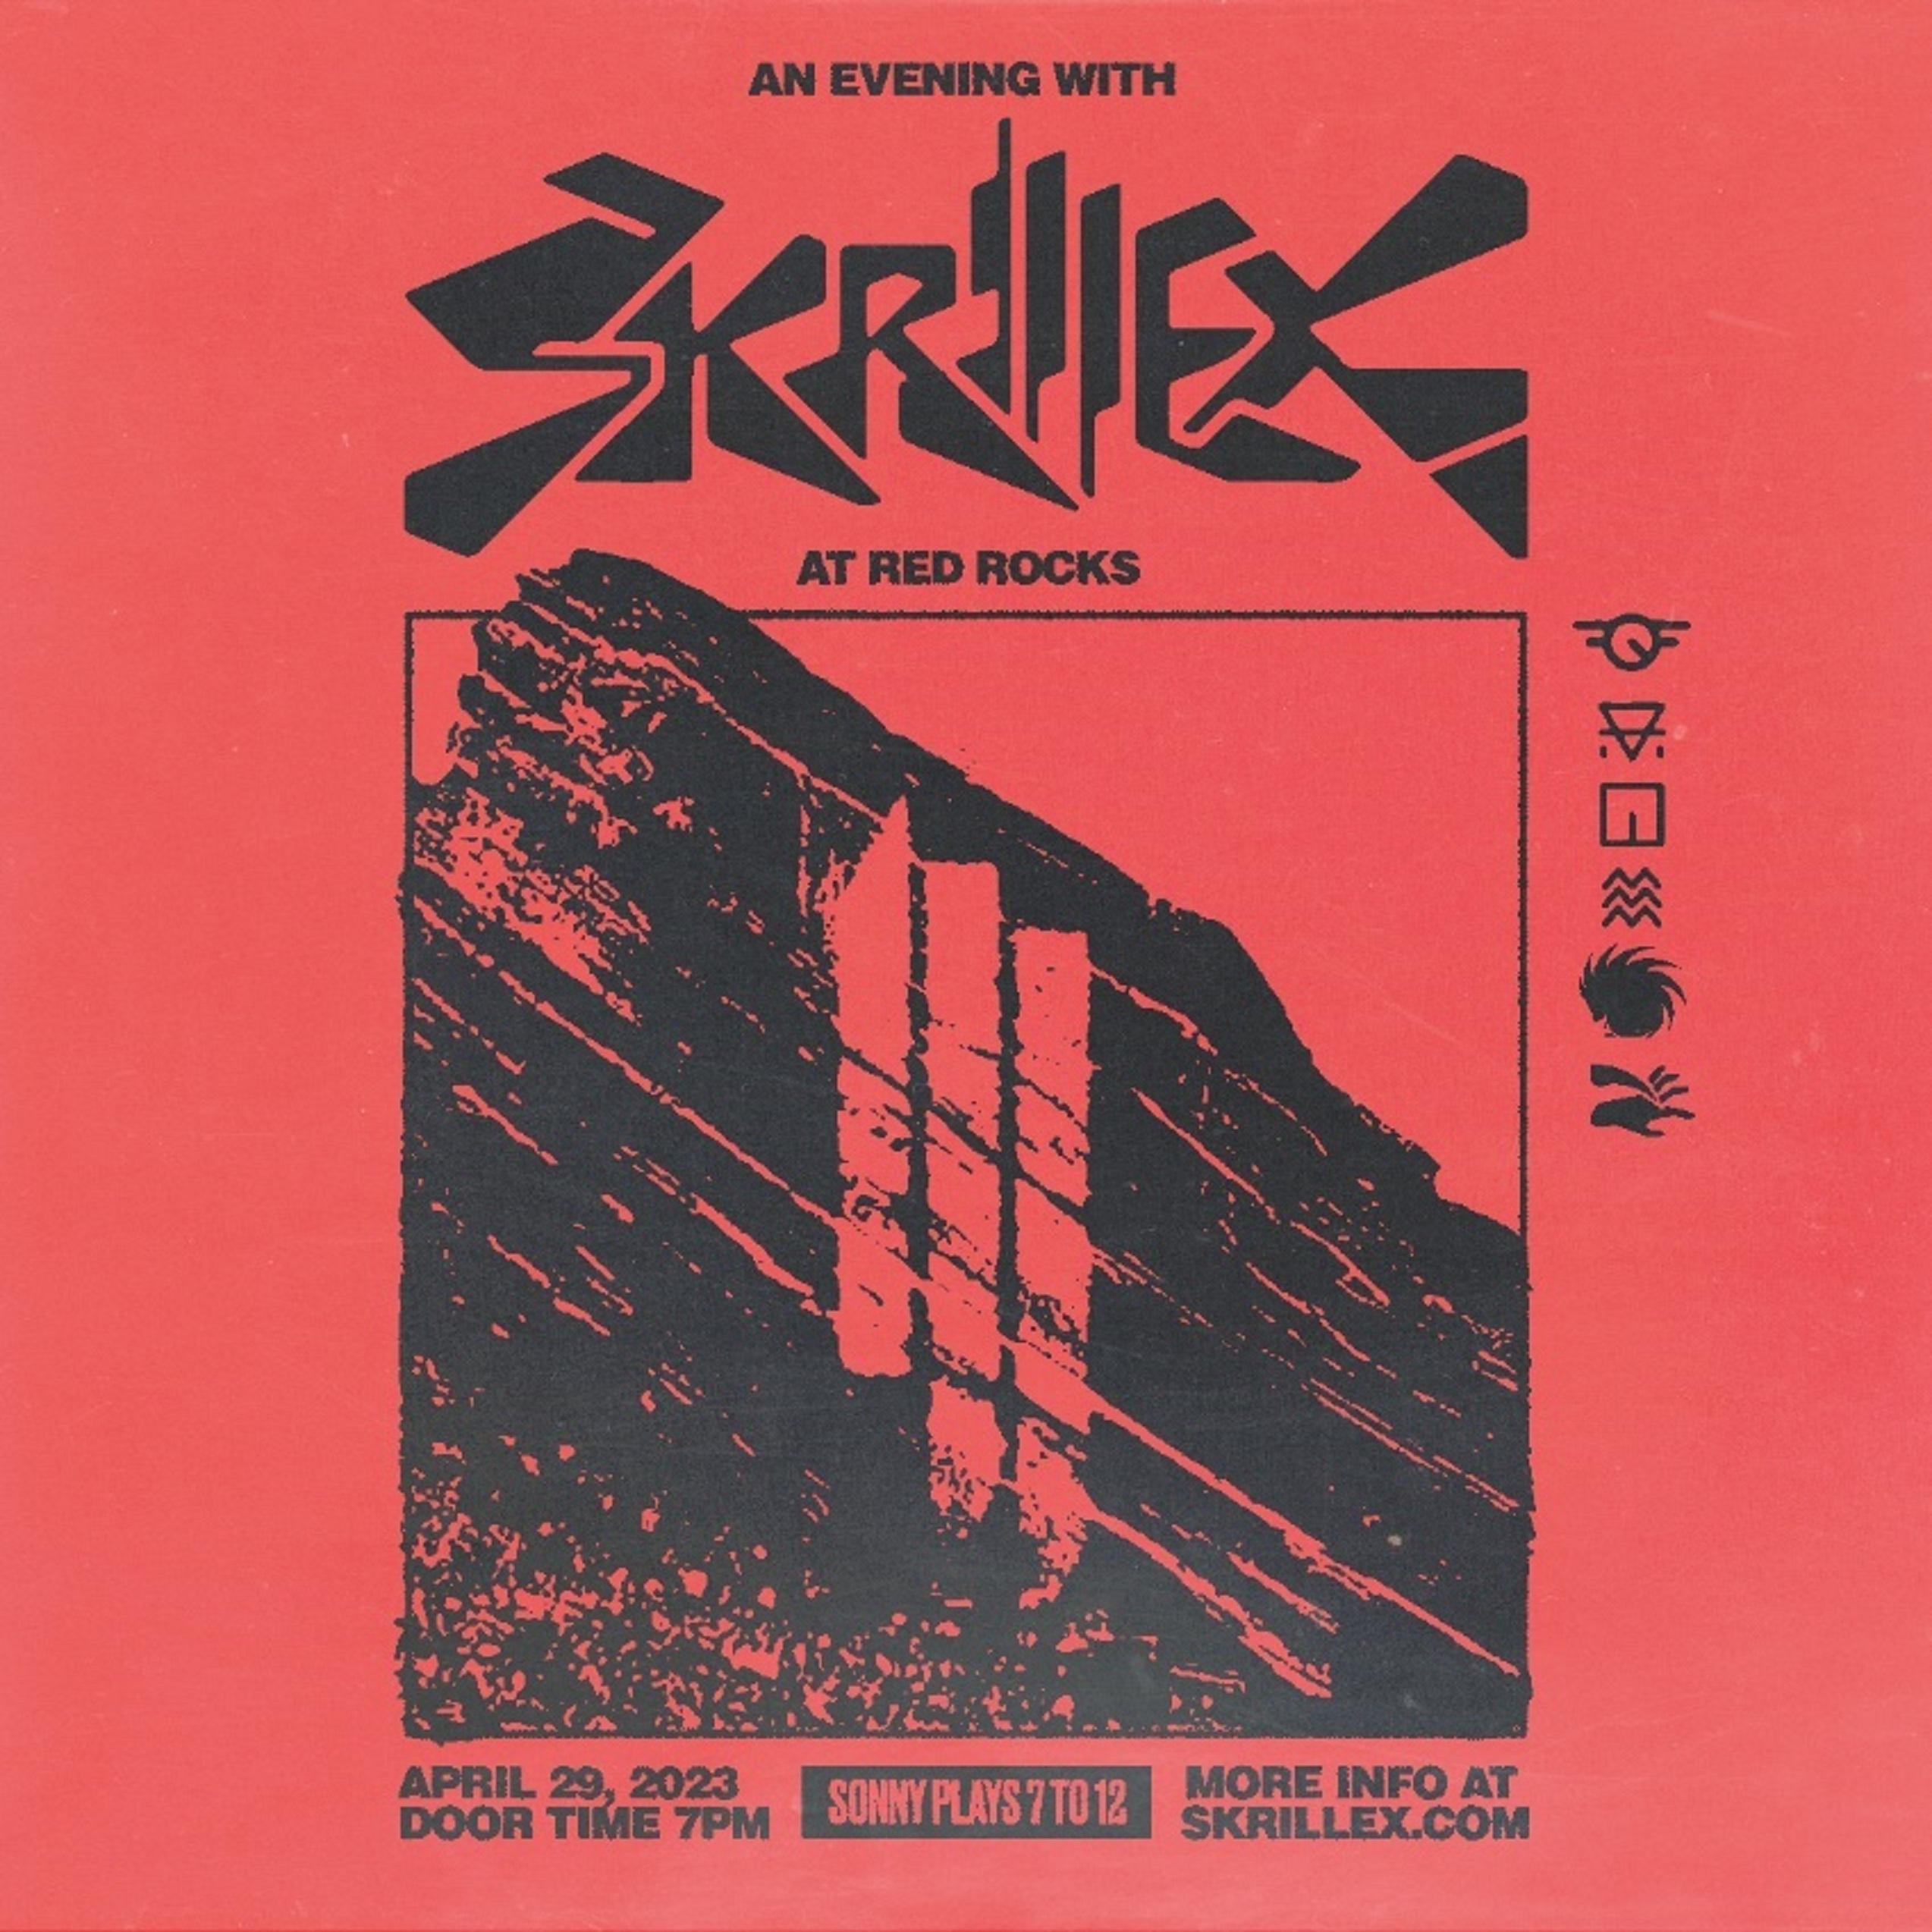 Skrillex just announced Red Rocks Amphitheatre show | 4/29/23